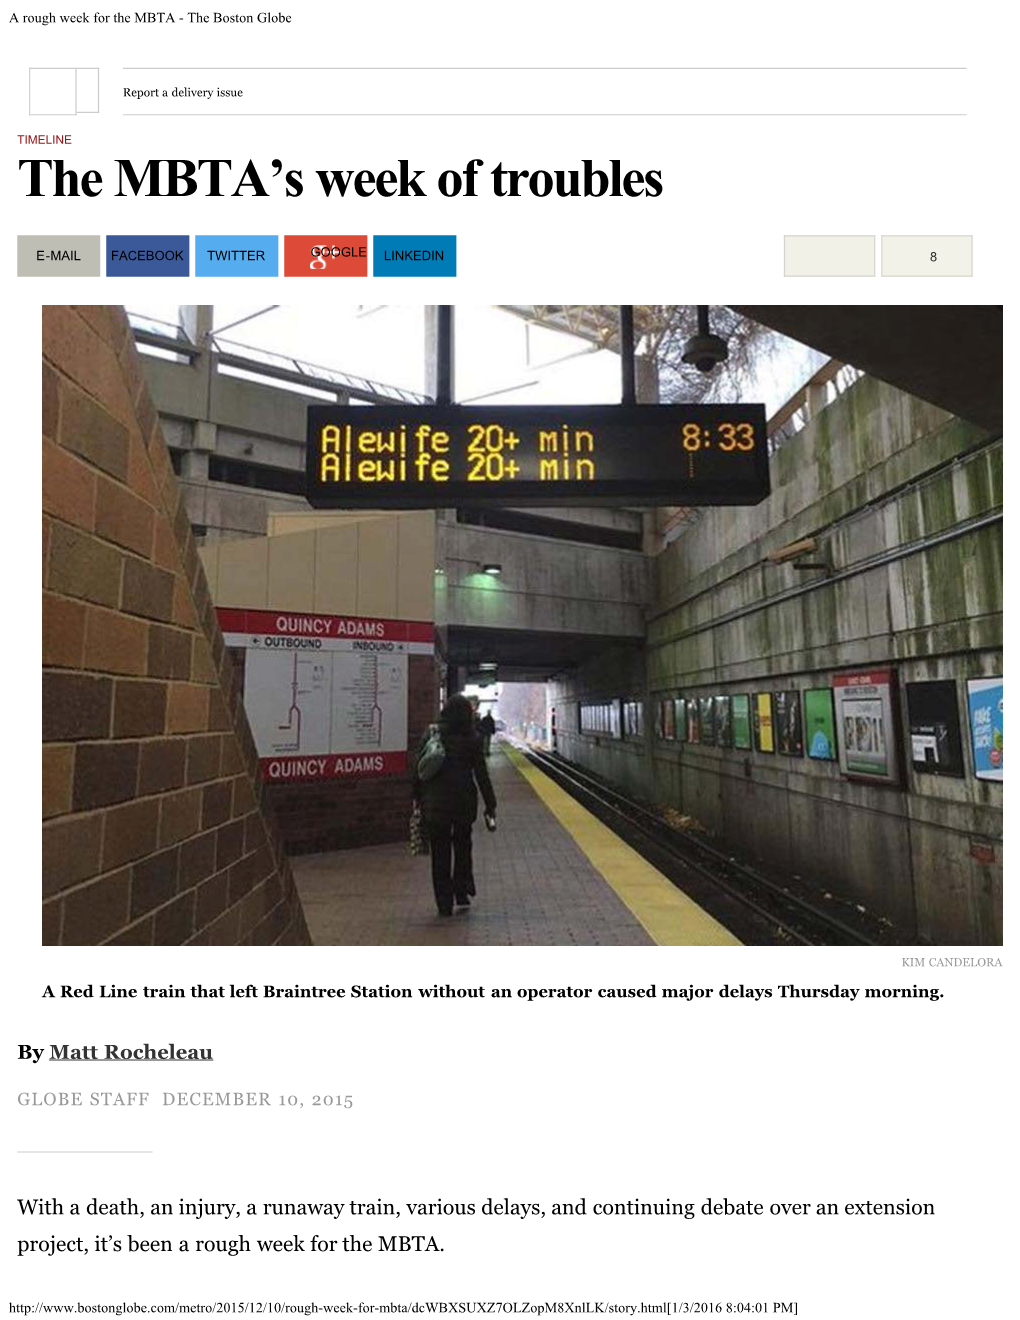 A Rough Week for the MBTA - the Boston Globe